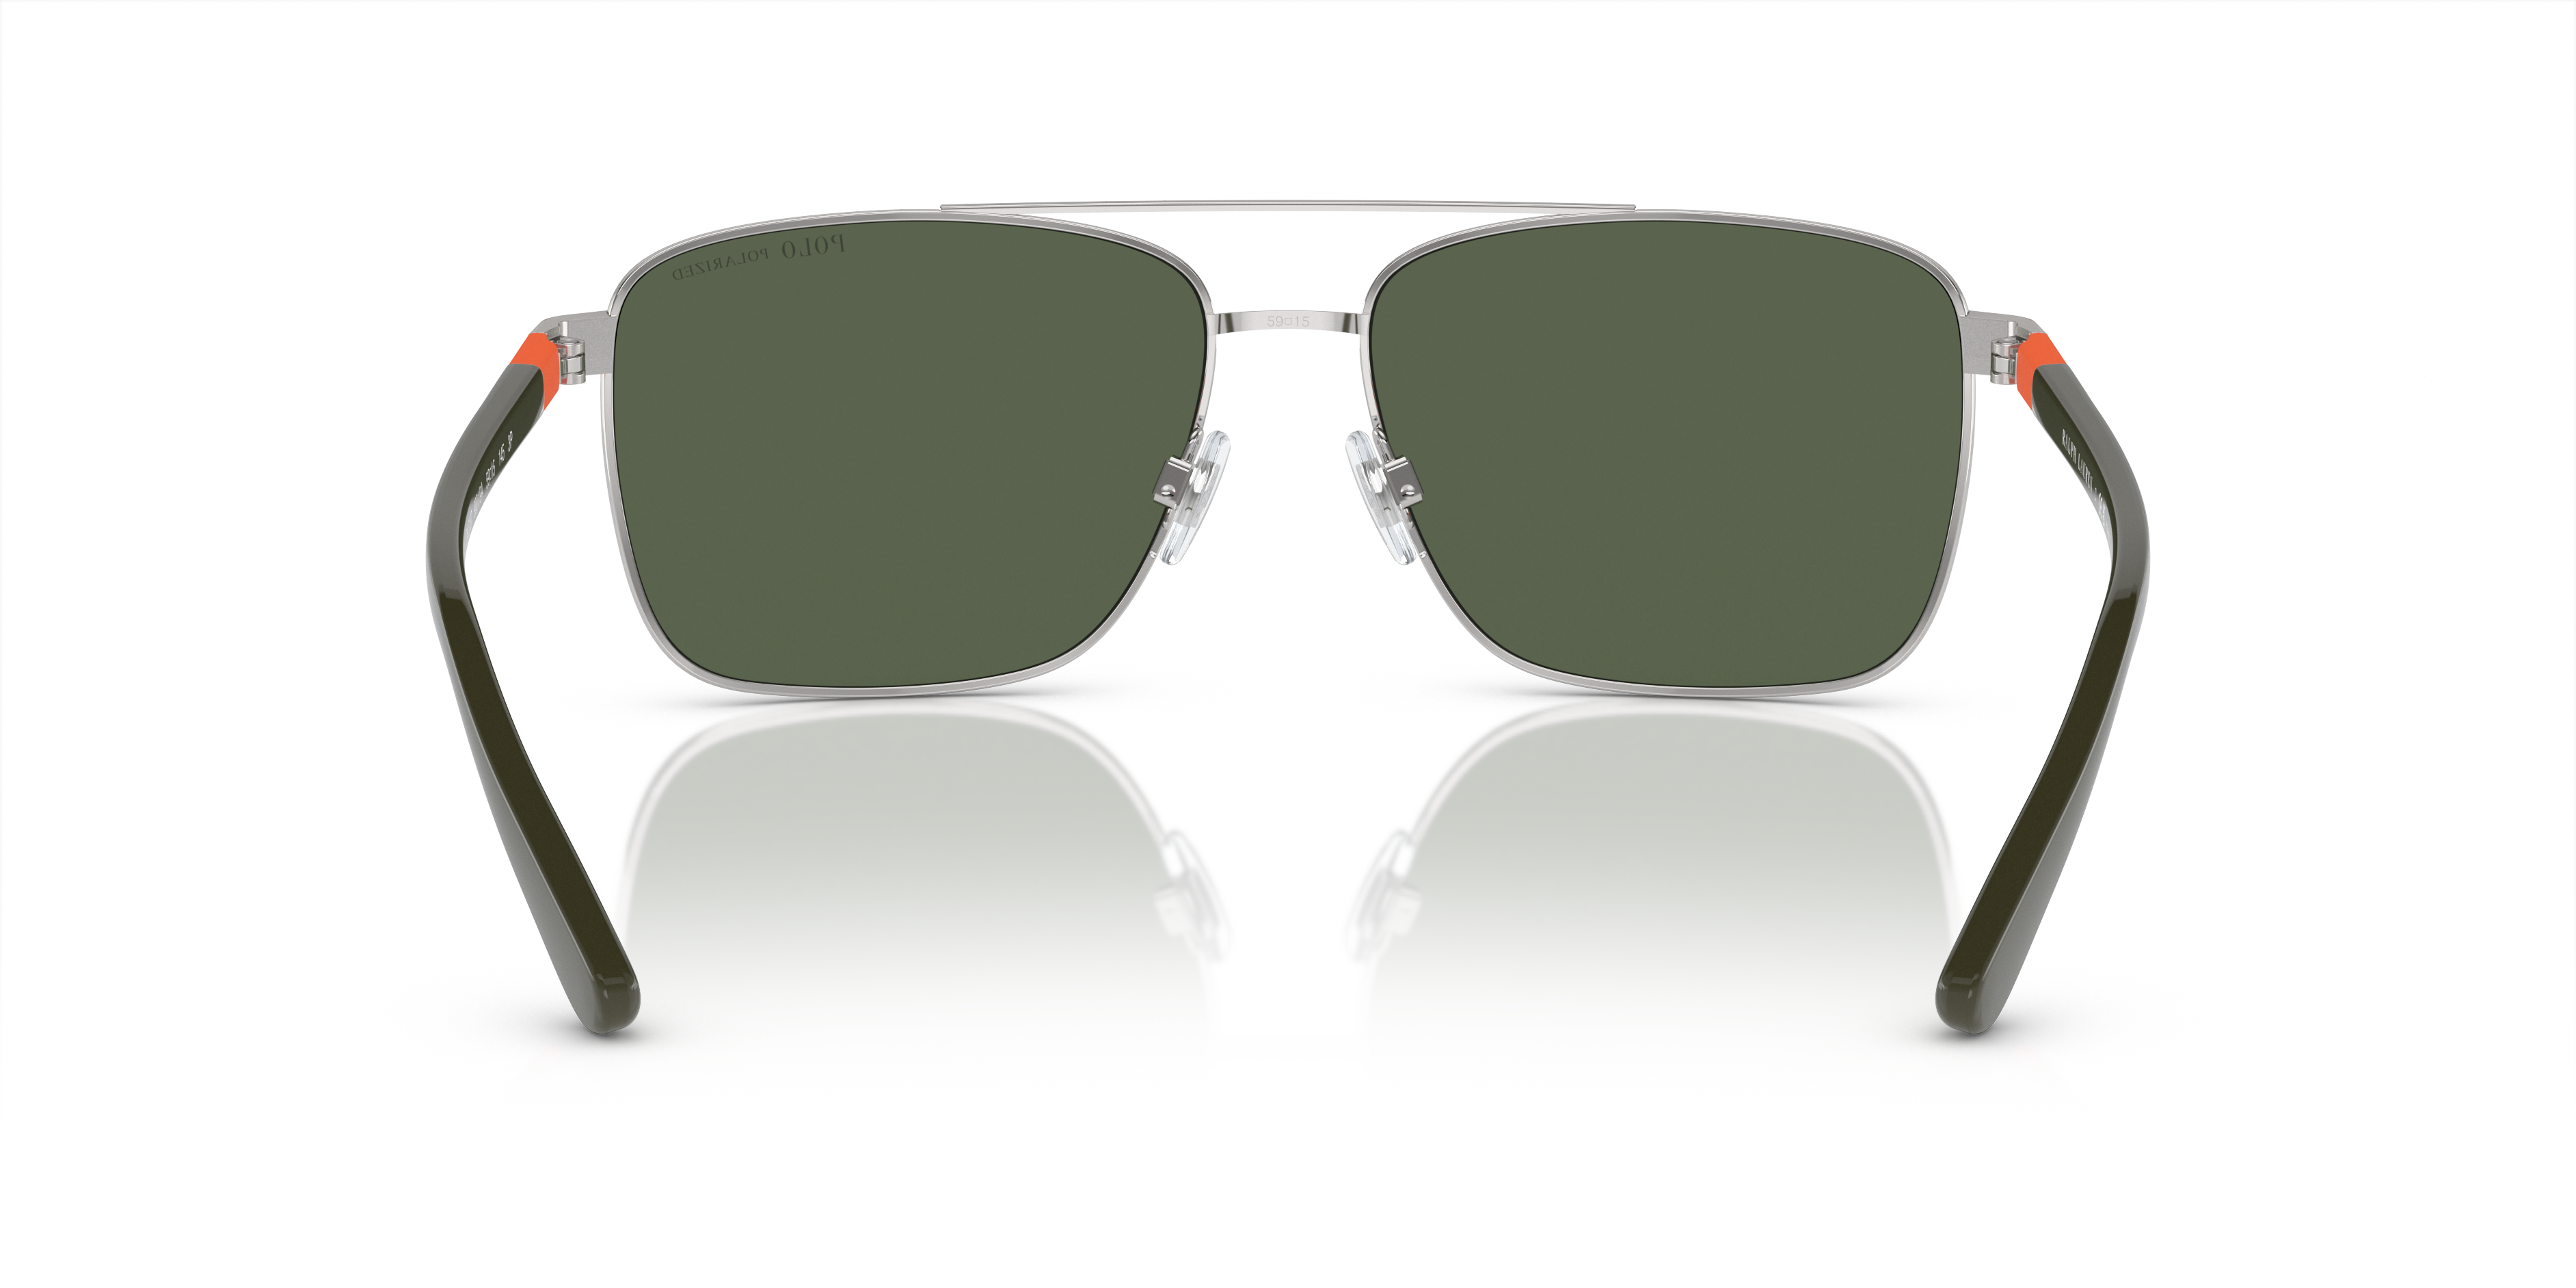 [products.image.detail02] Polo Ralph Lauren PH 3137 Sunglasses